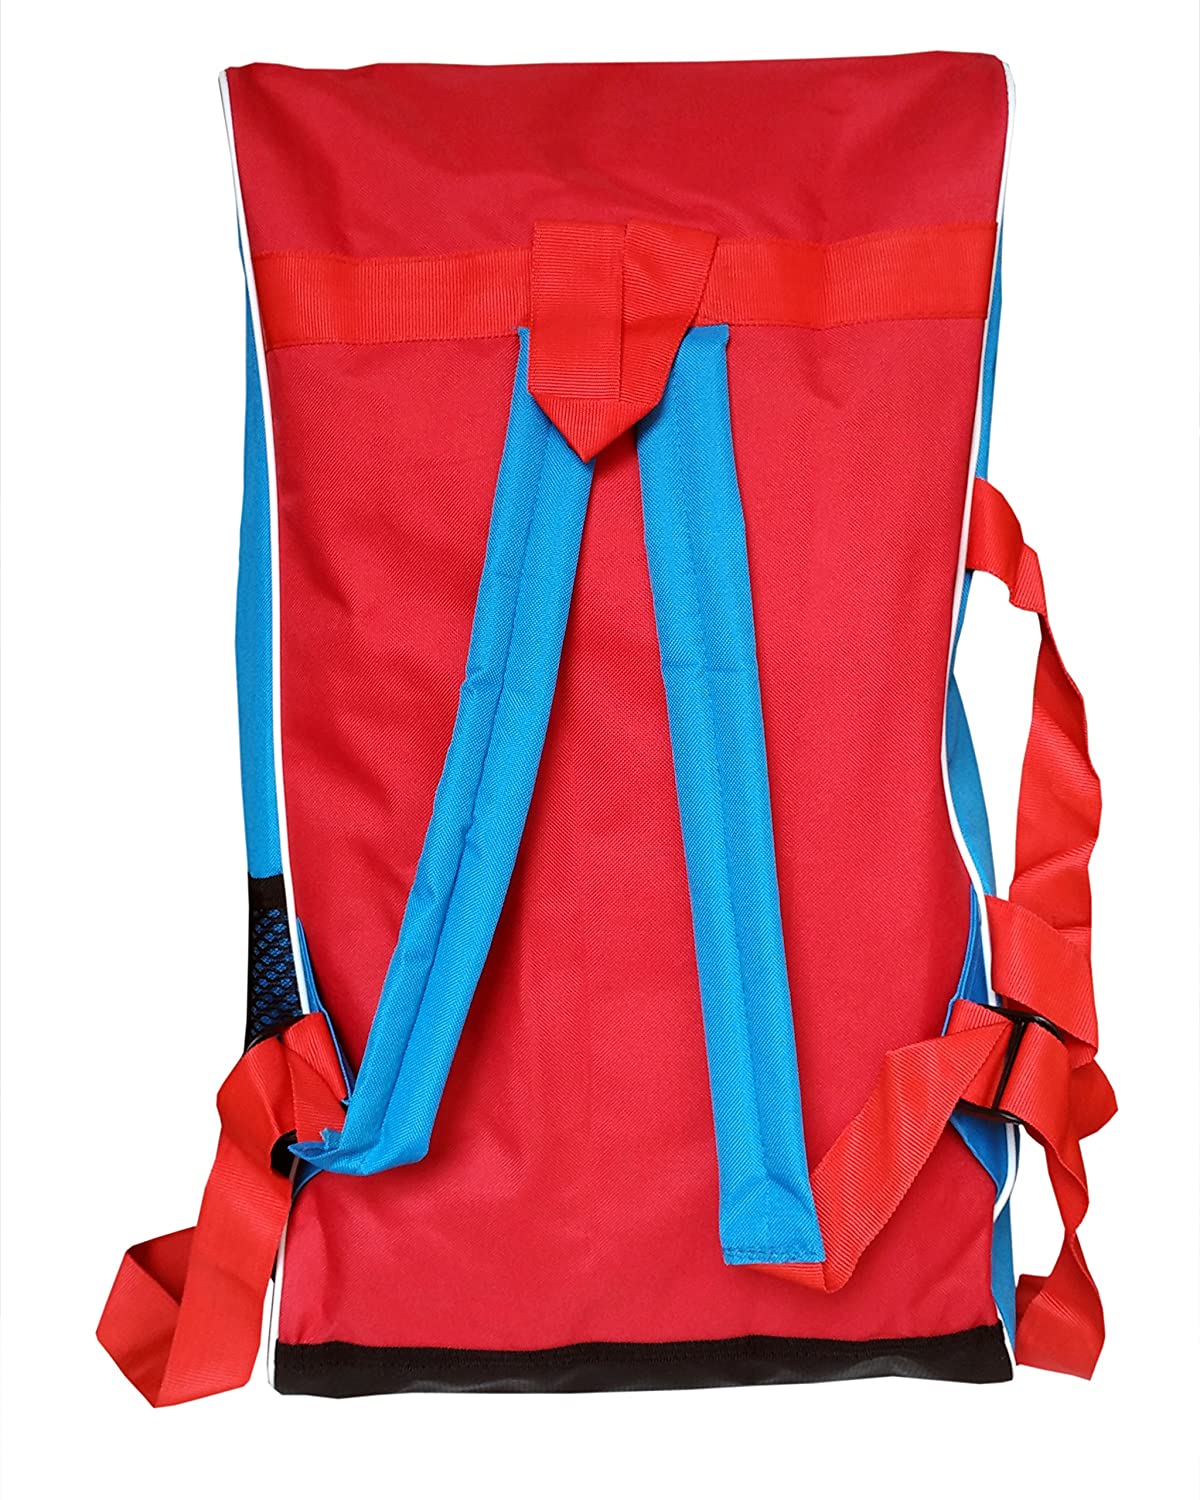 Prokick Sports Carrier Multi Utility Sports Bag - Ideal for kids (Red/Sky Blue) - Best Price online Prokicksports.com